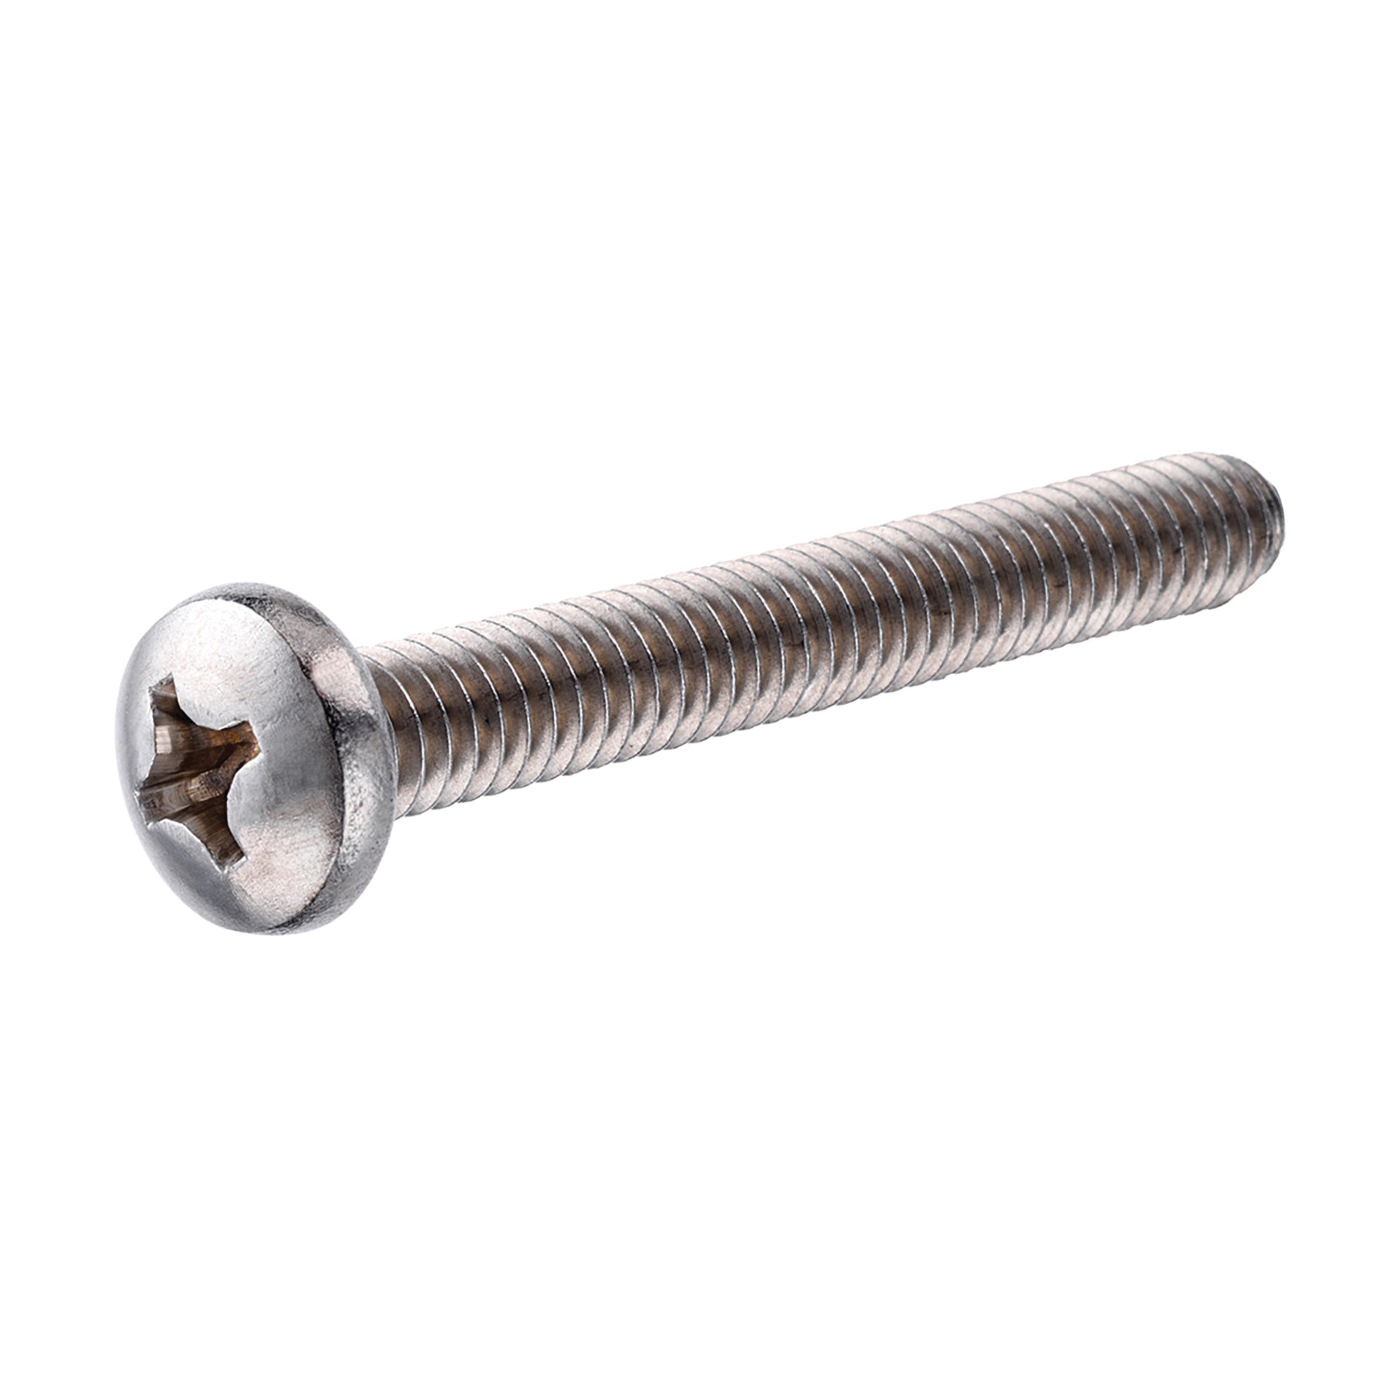 881141 Machine Screw, #3-48 Thread, 3/8 in L, Pan Head, Phillips Drive, Stainless Steel